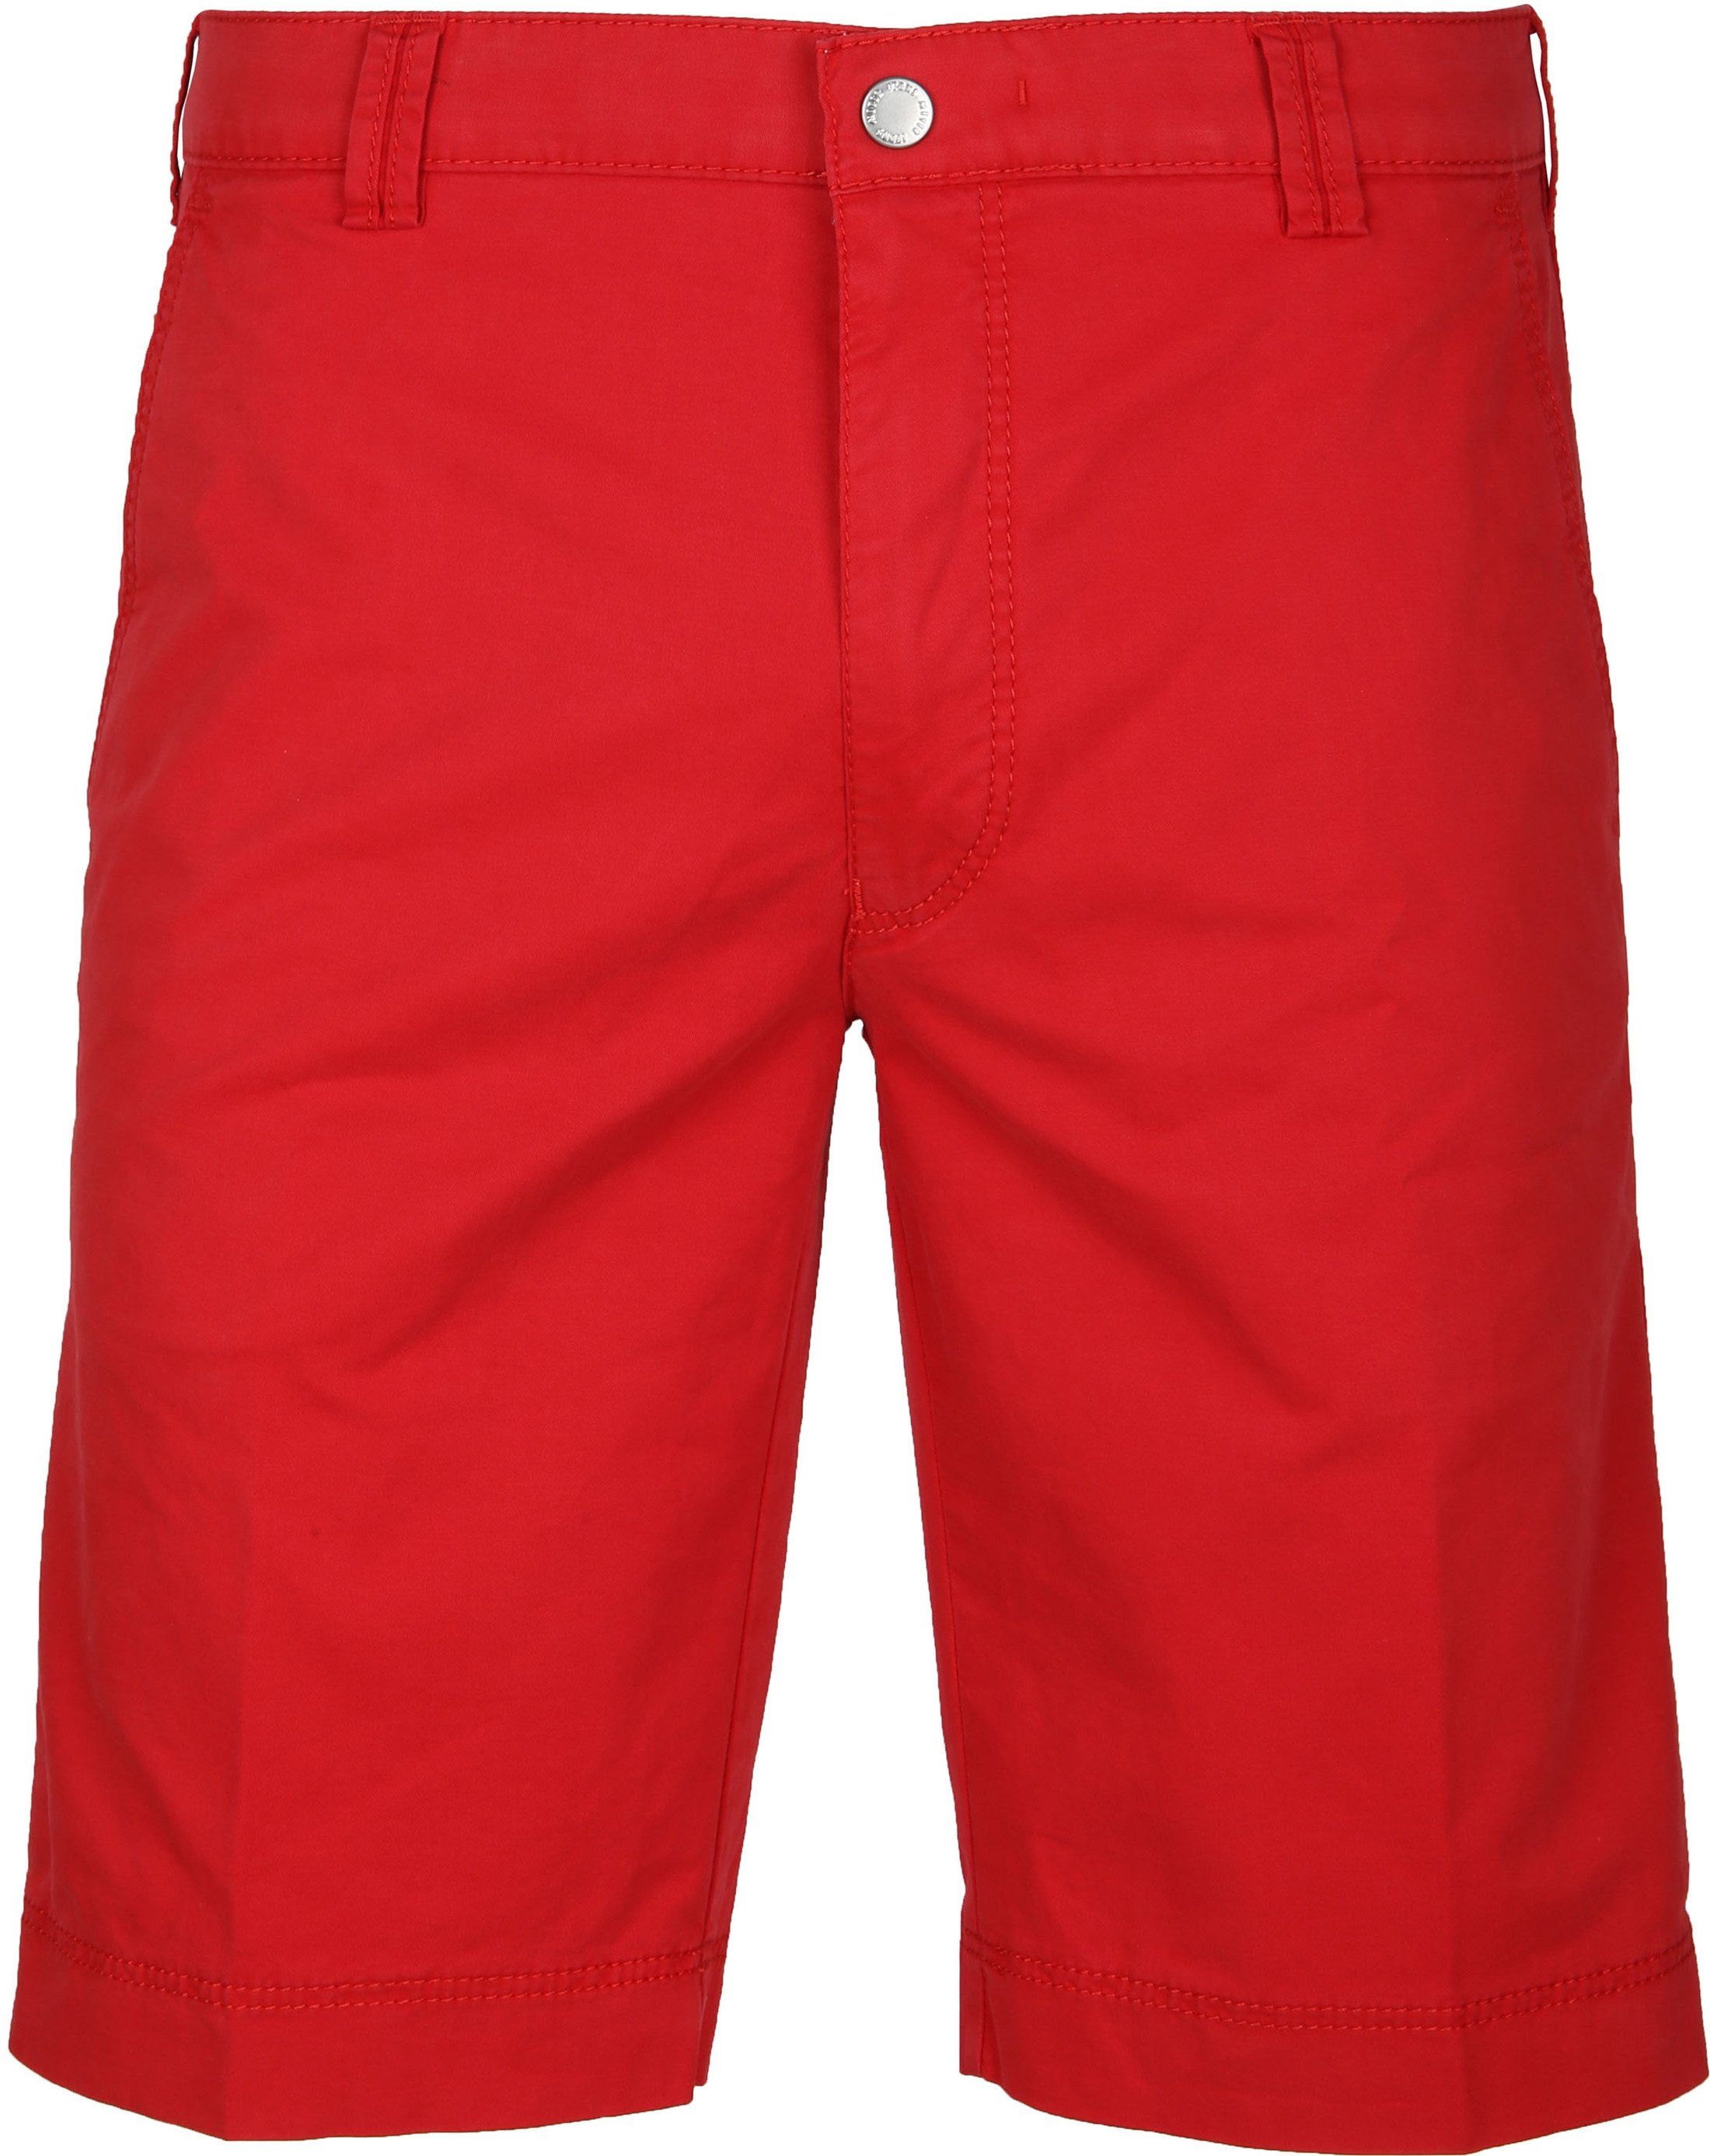 Meyer Palma Shorts Red size W 34